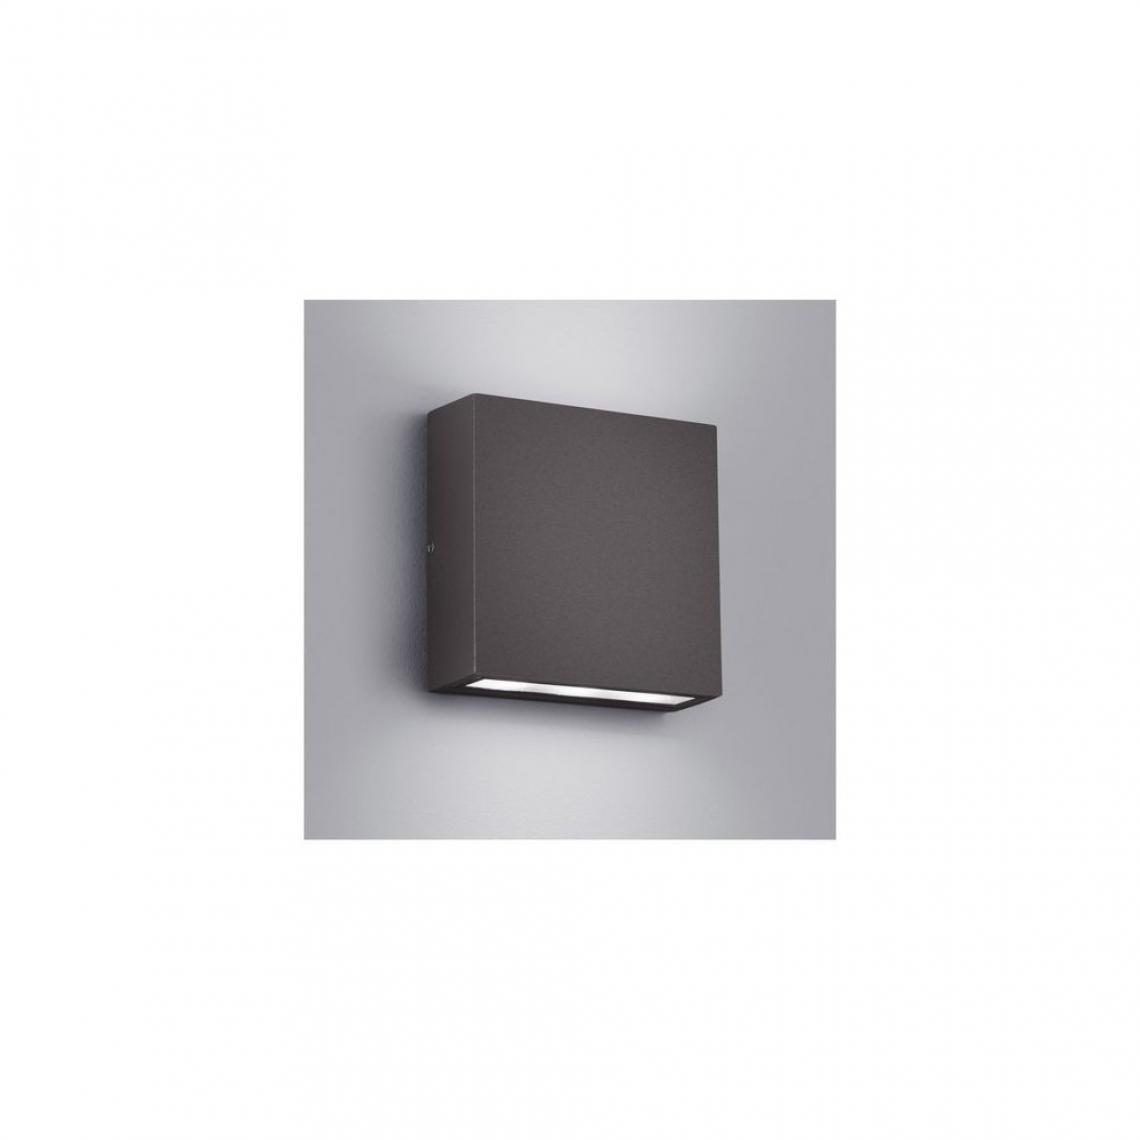 Boutica-Design - Applique Thames Anthracite 2x3W SMD LED - Applique, hublot